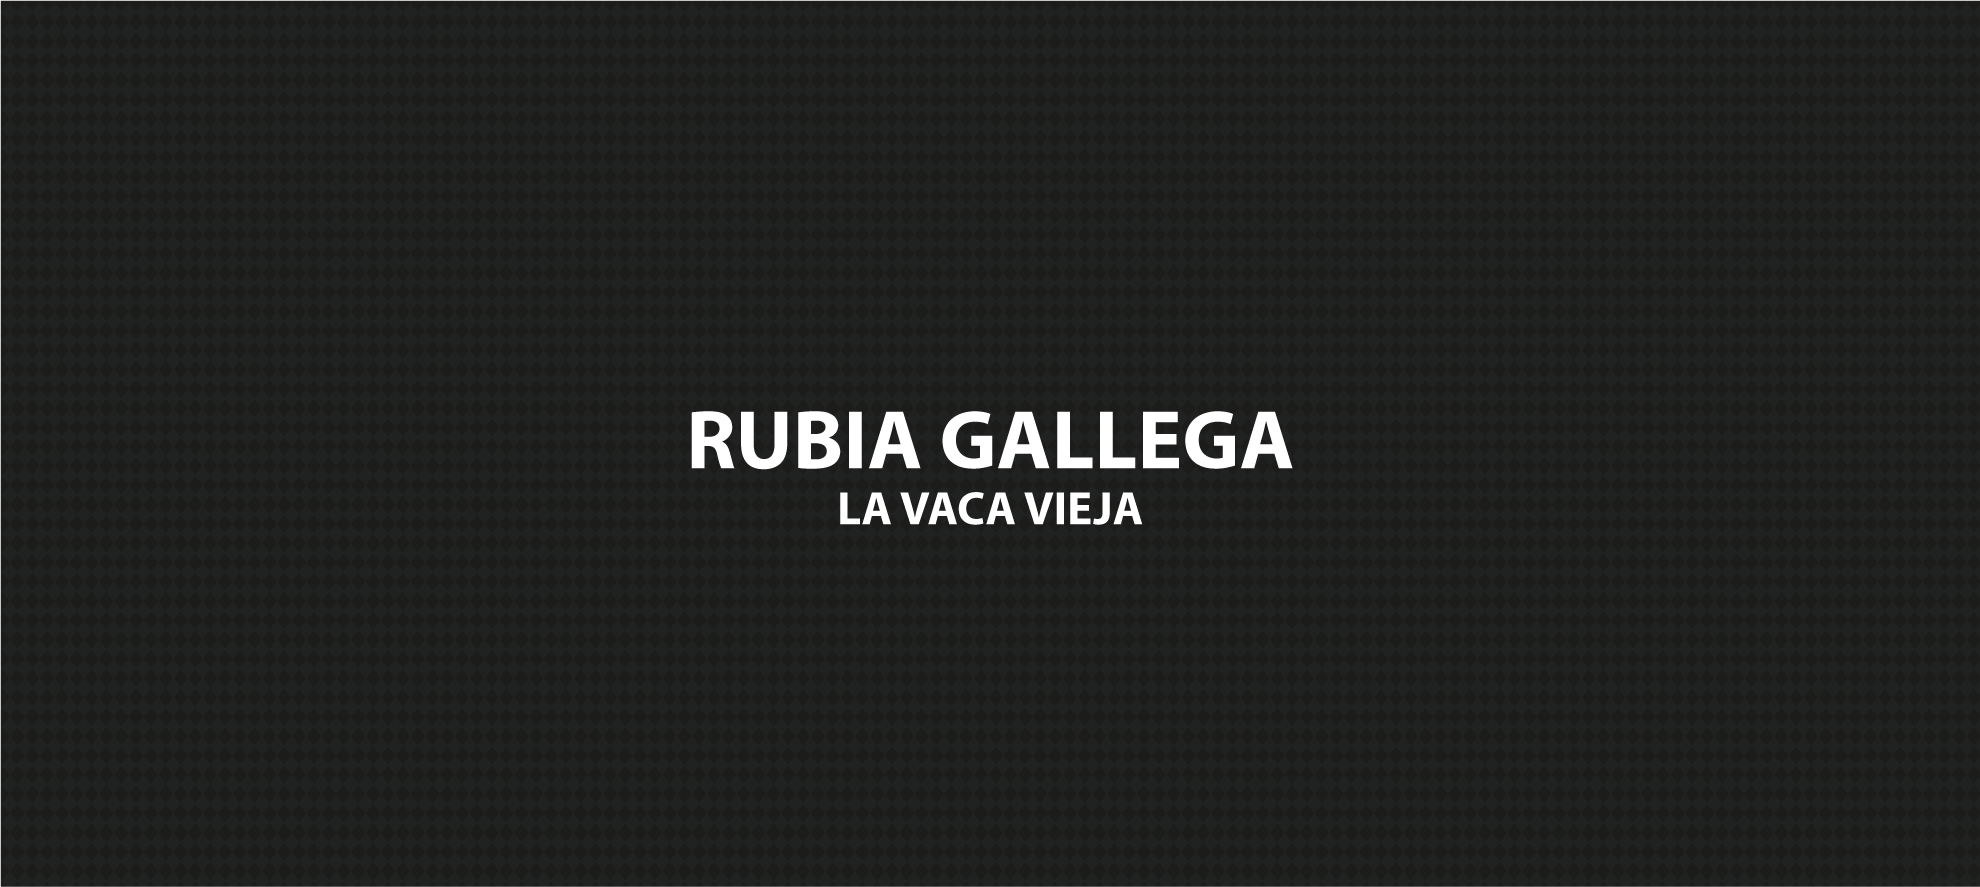 Rubia Gallega (Vaca Vieja)